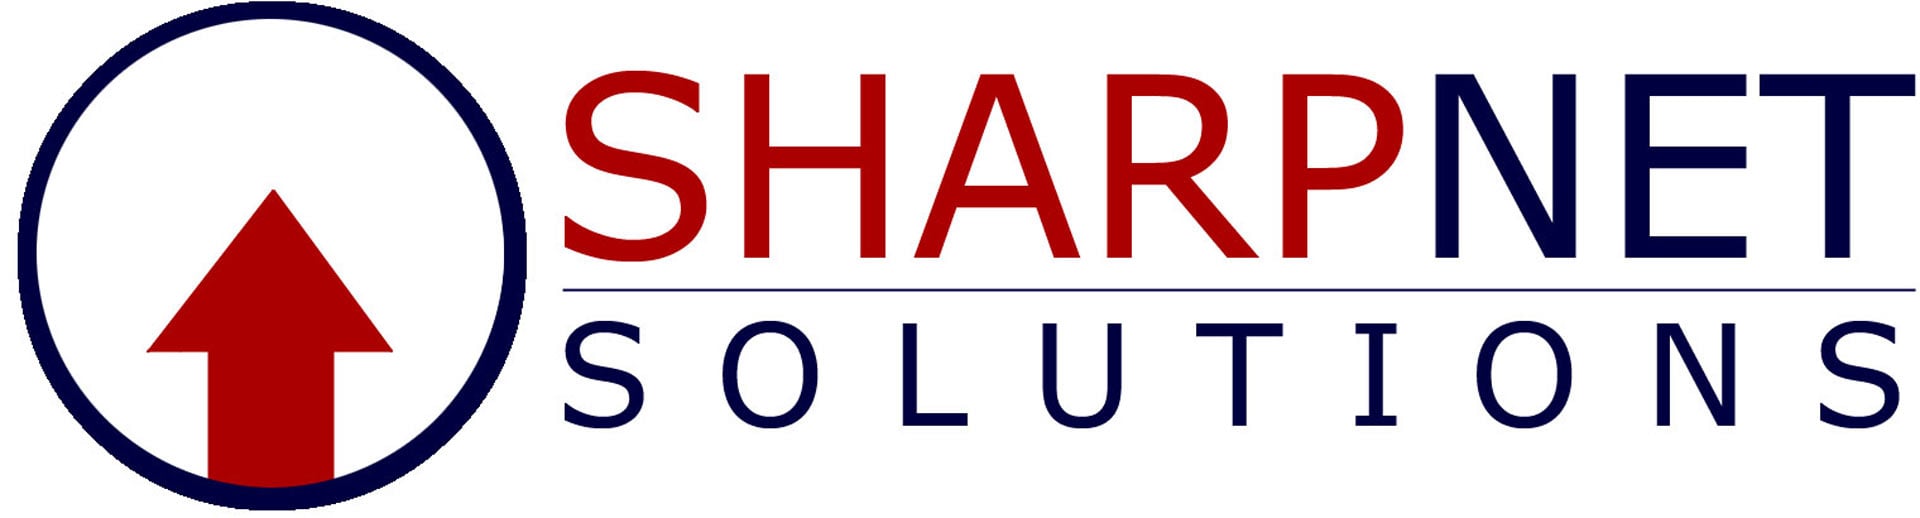 Best Real Estate SEO Agency Logo: SharpNet